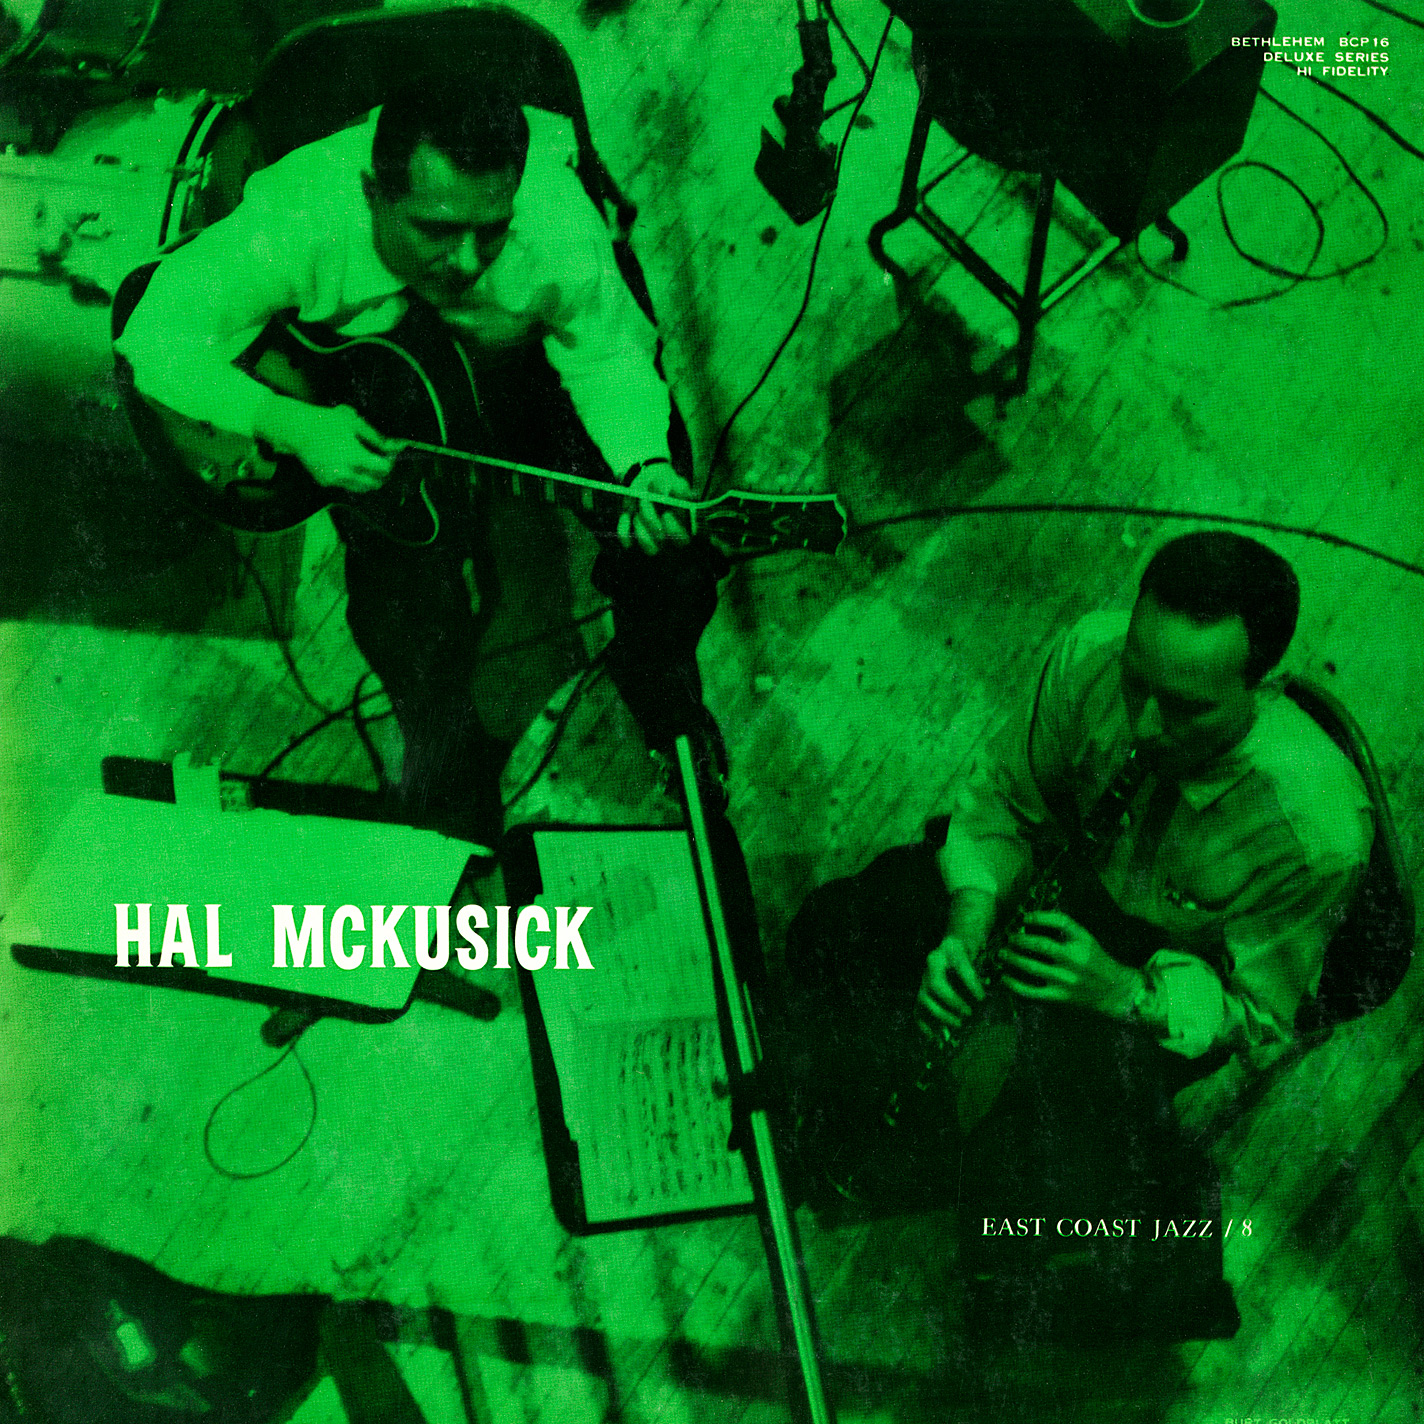 East Coast Jazz, Vol.8 – Hal McKusick (1955/2014) [PrestoClassical FLAC 24bit/96kHz]